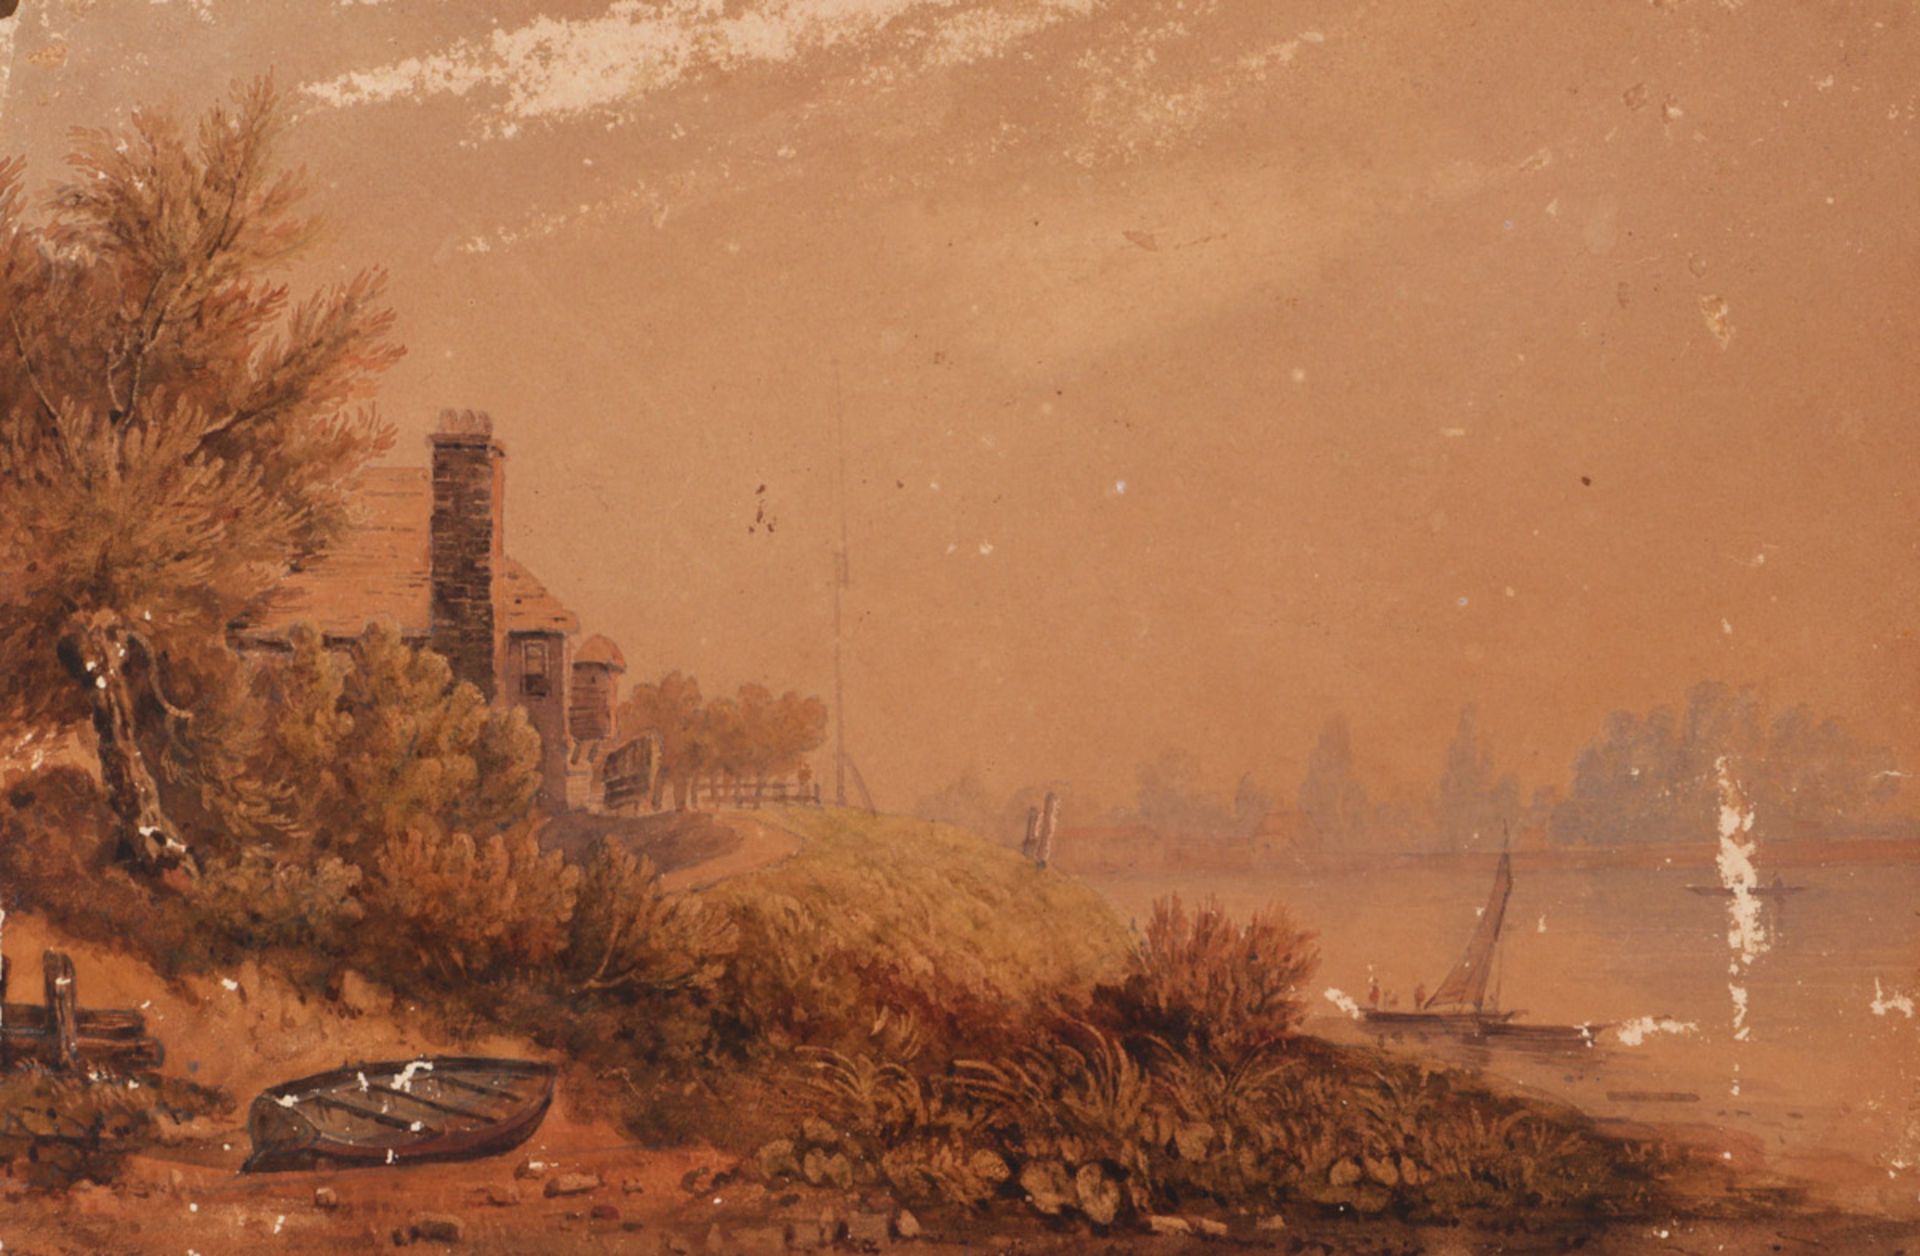 JOHN SCOTT TUCKER (19TH CENTURY), LANDSCAPE WITH LAKE Watercolor on paper. American school, first